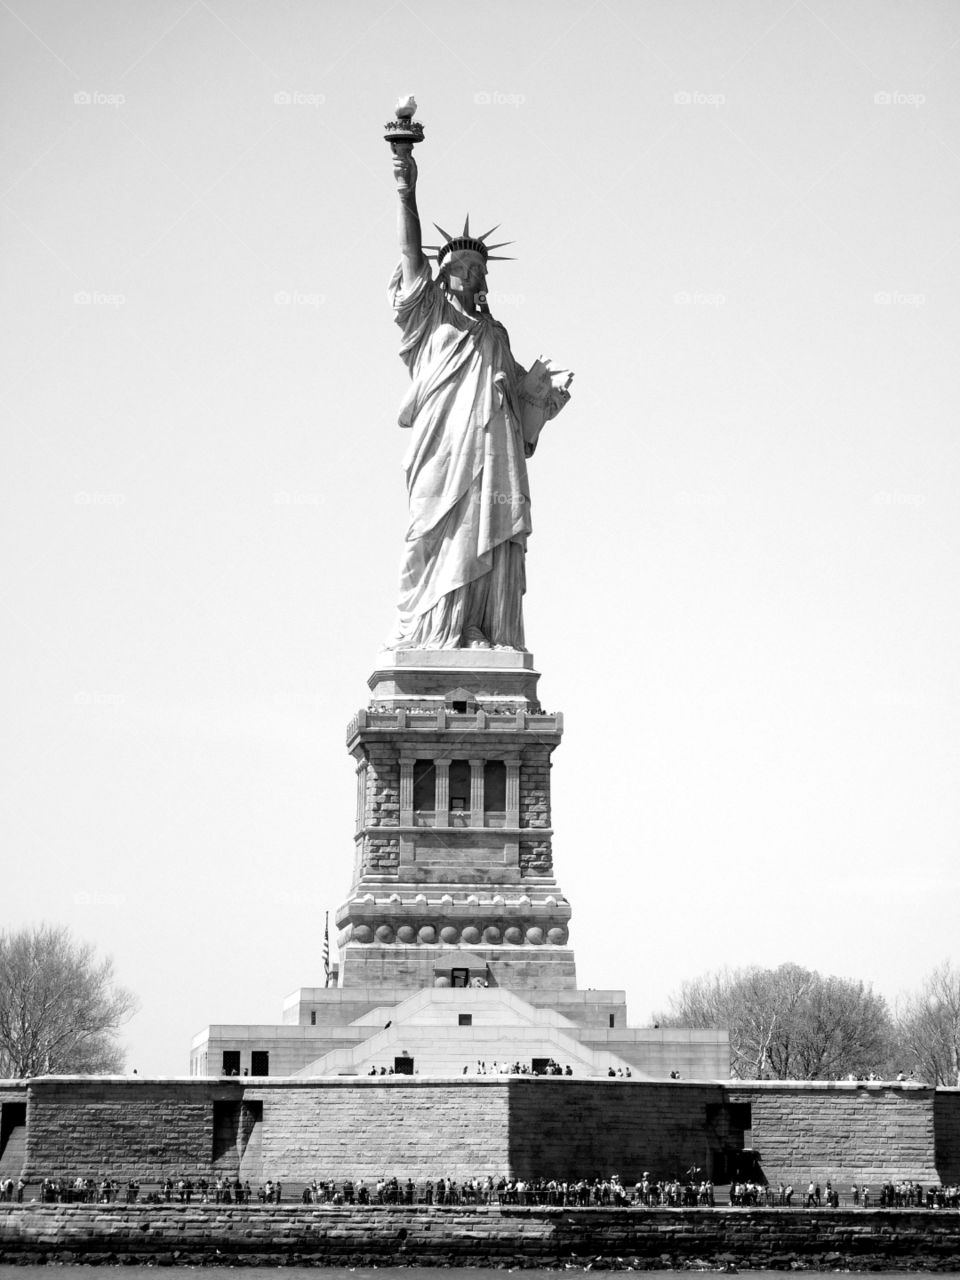 Lady Liberty in monochrome